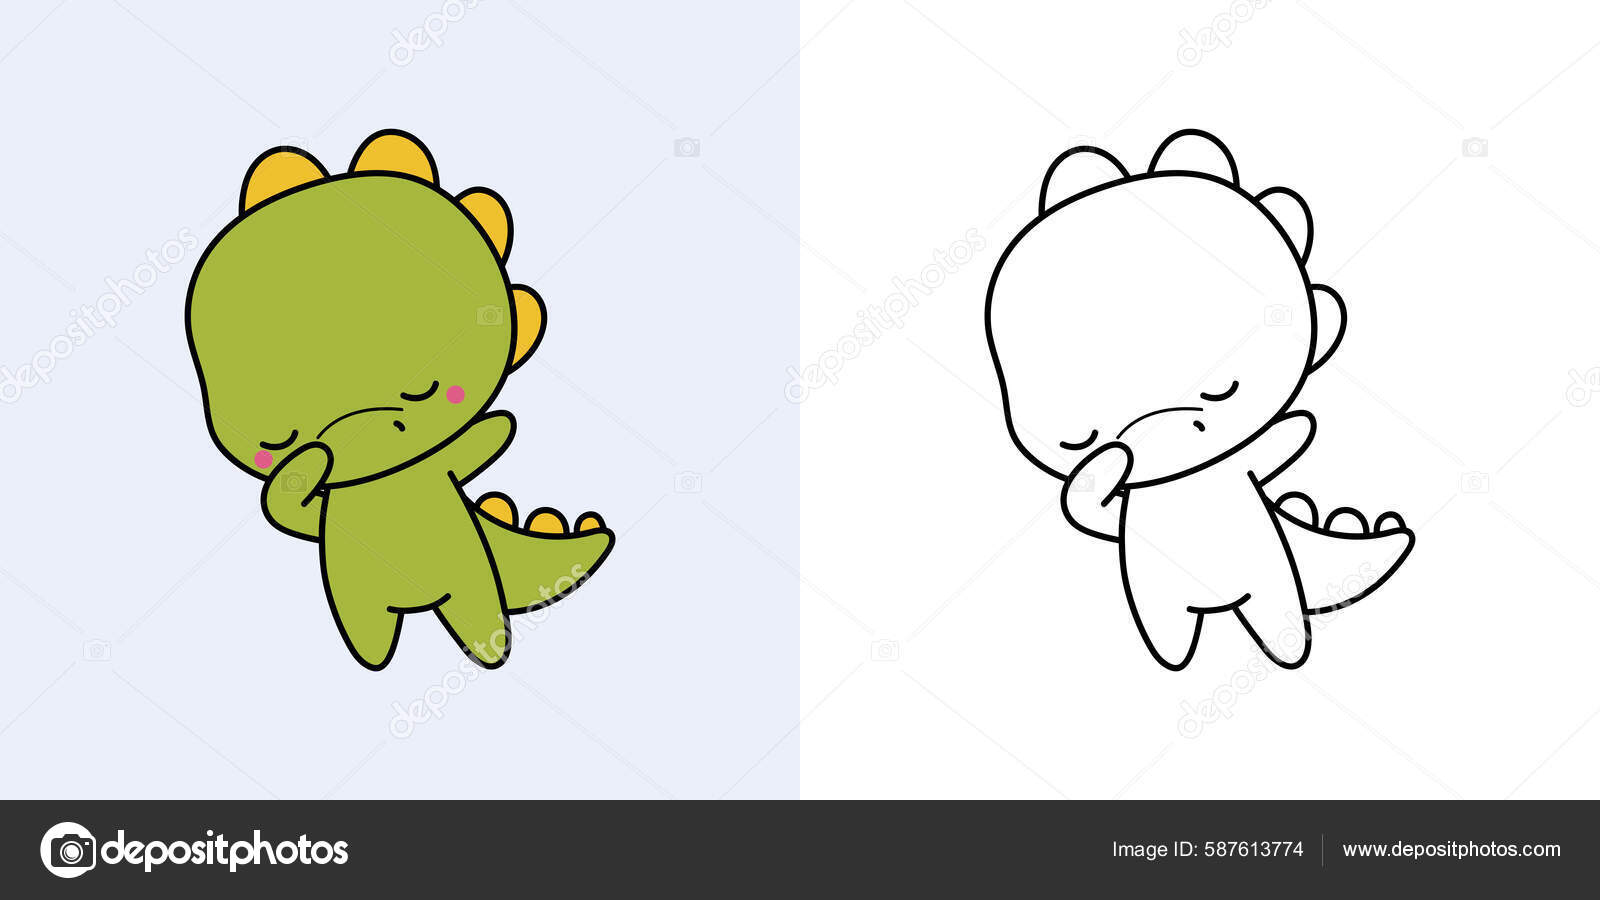 dinosaur character cartoon cute kawaii animal illustration clipart